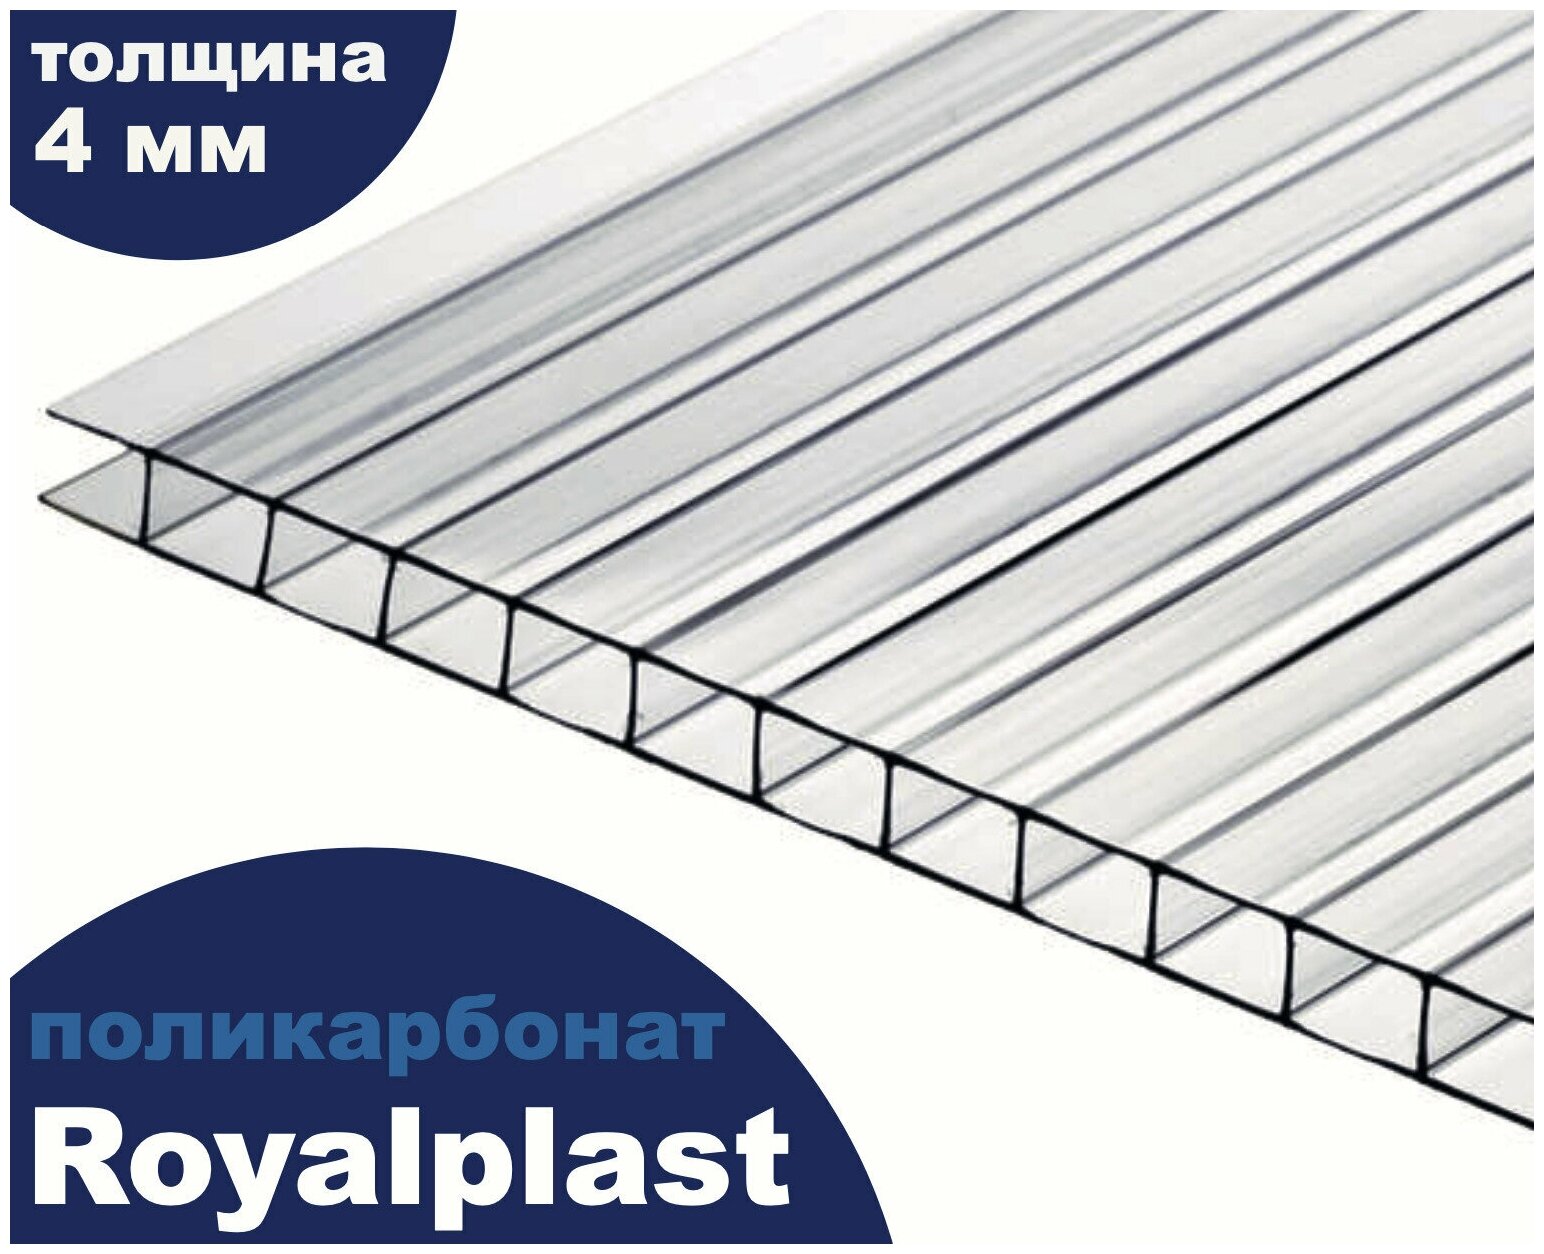 Премиум поликарбонат прозрачный, Royalplast, 4 мм, 6 метров, 1 лист